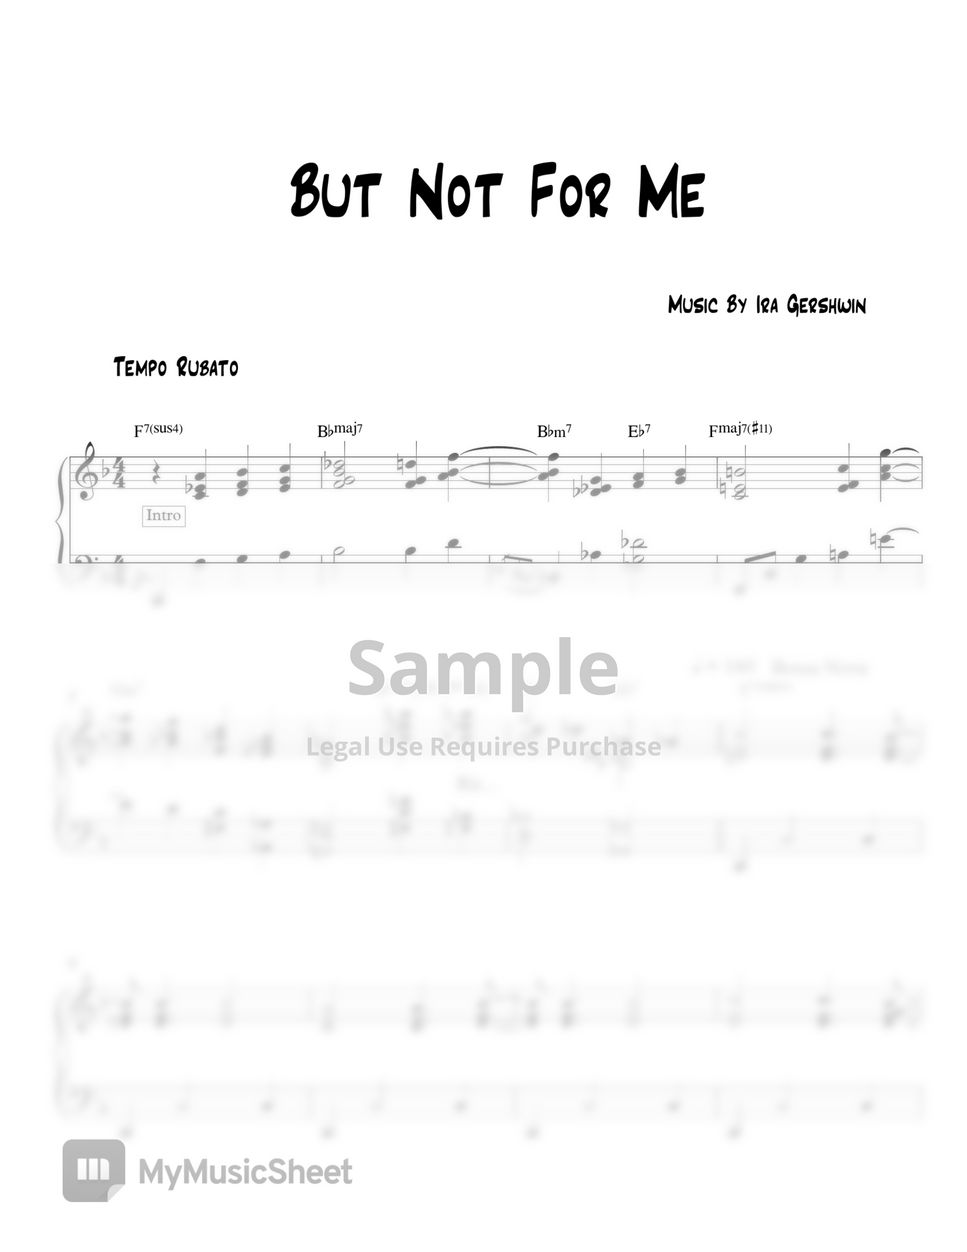 Ira Gershwin - But Not For Me (Jazz Bossanova) by MIWHA